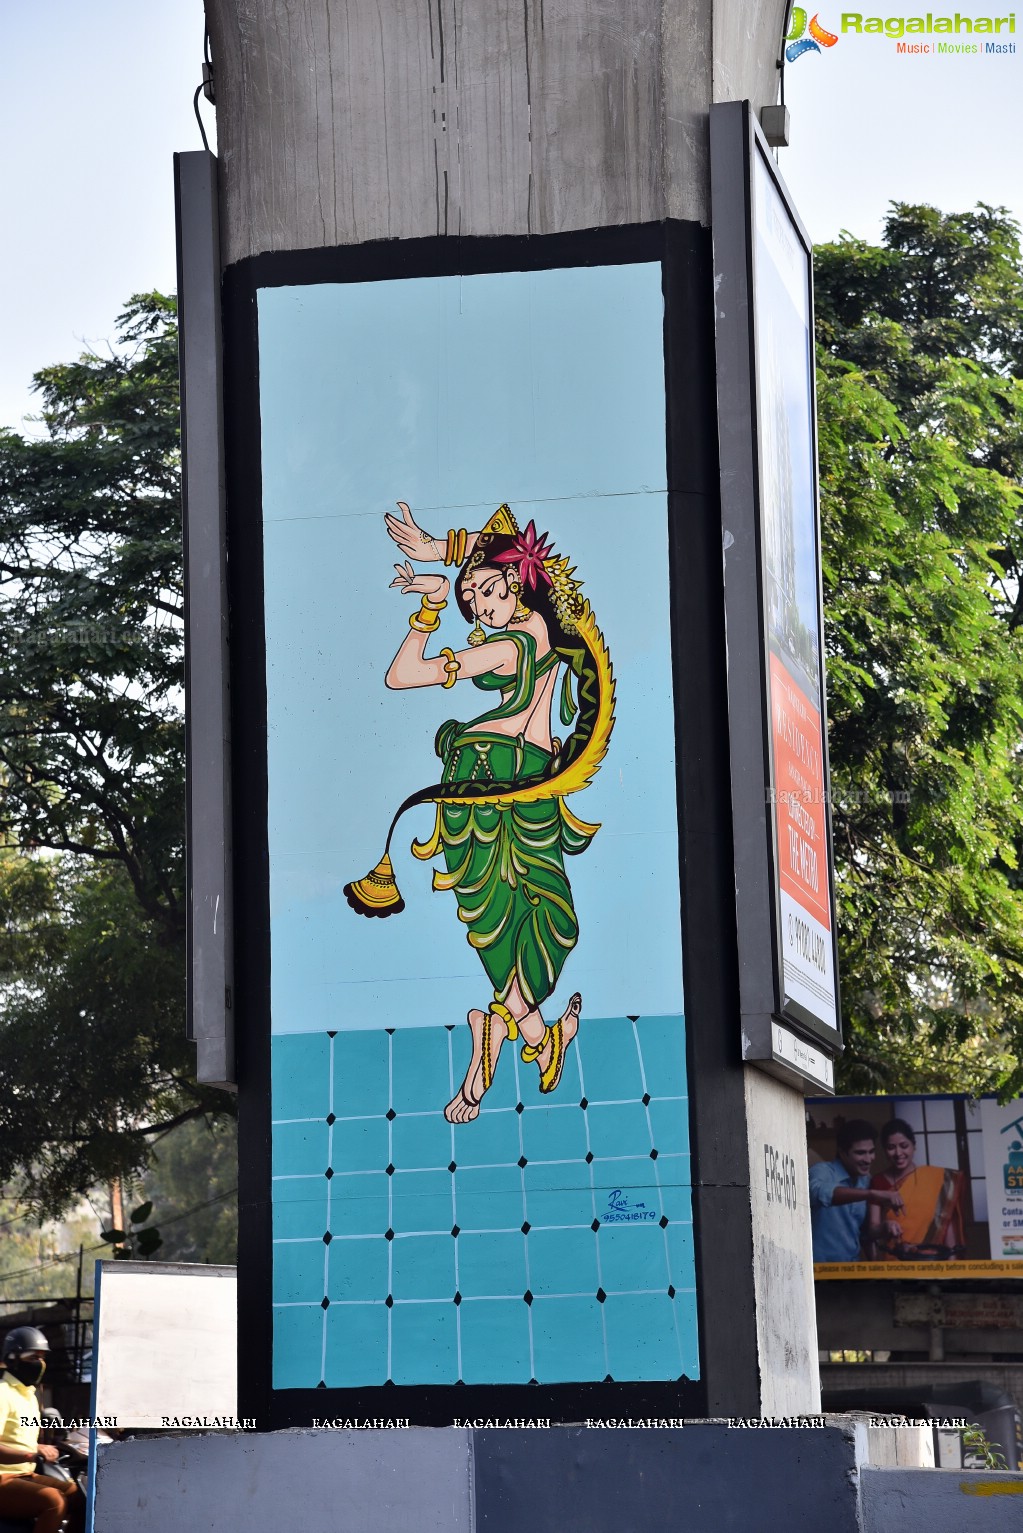 Prapancha Telugu Mahasabhalu 2017 at State Art Gallery